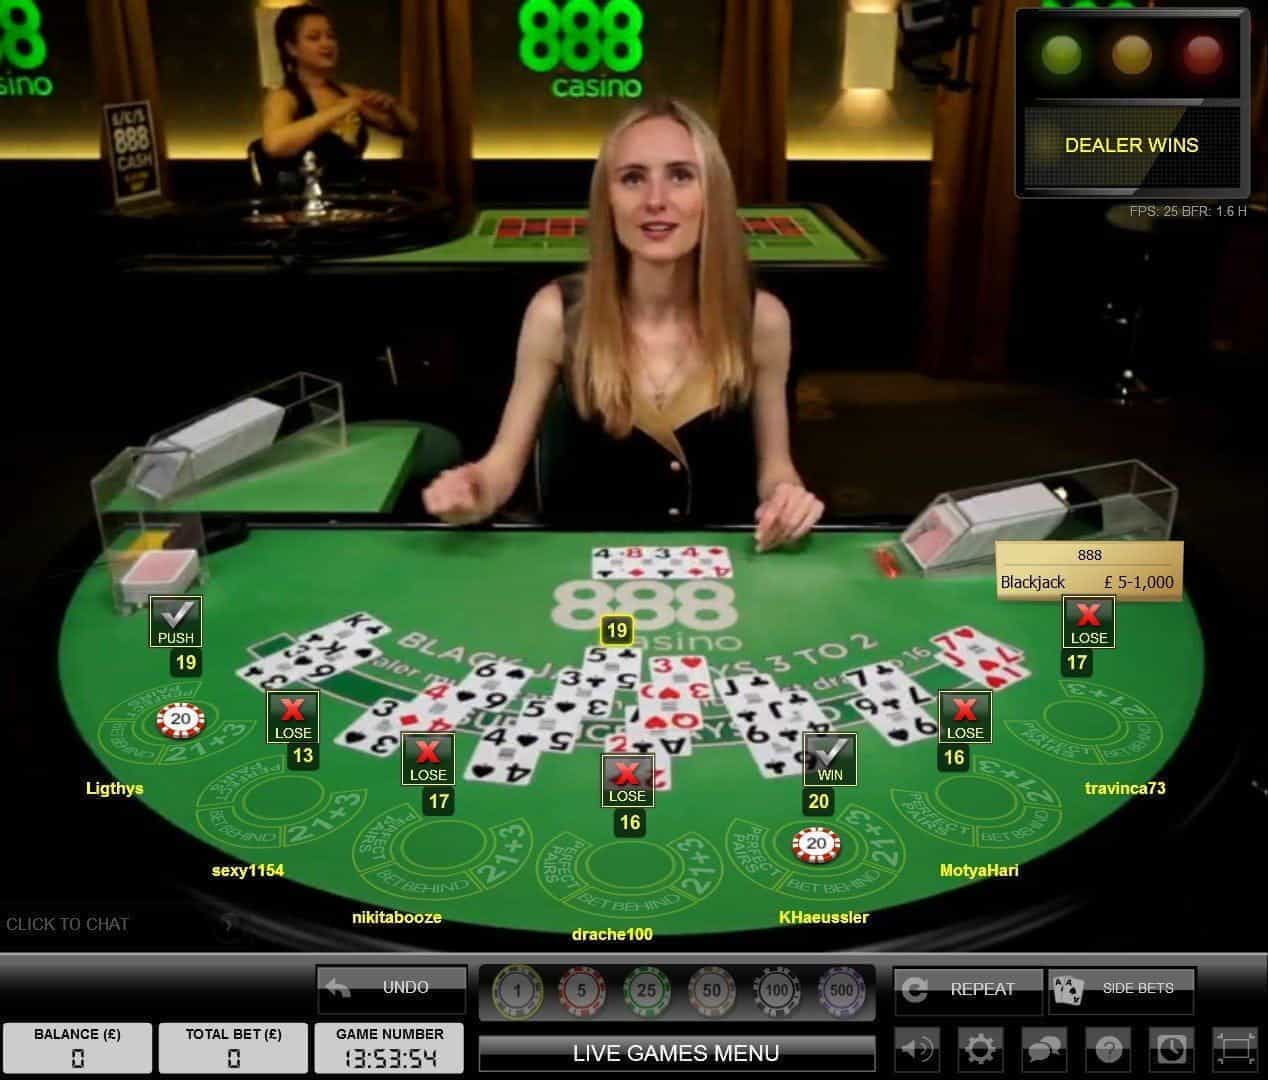 Casino 888 Blackjack